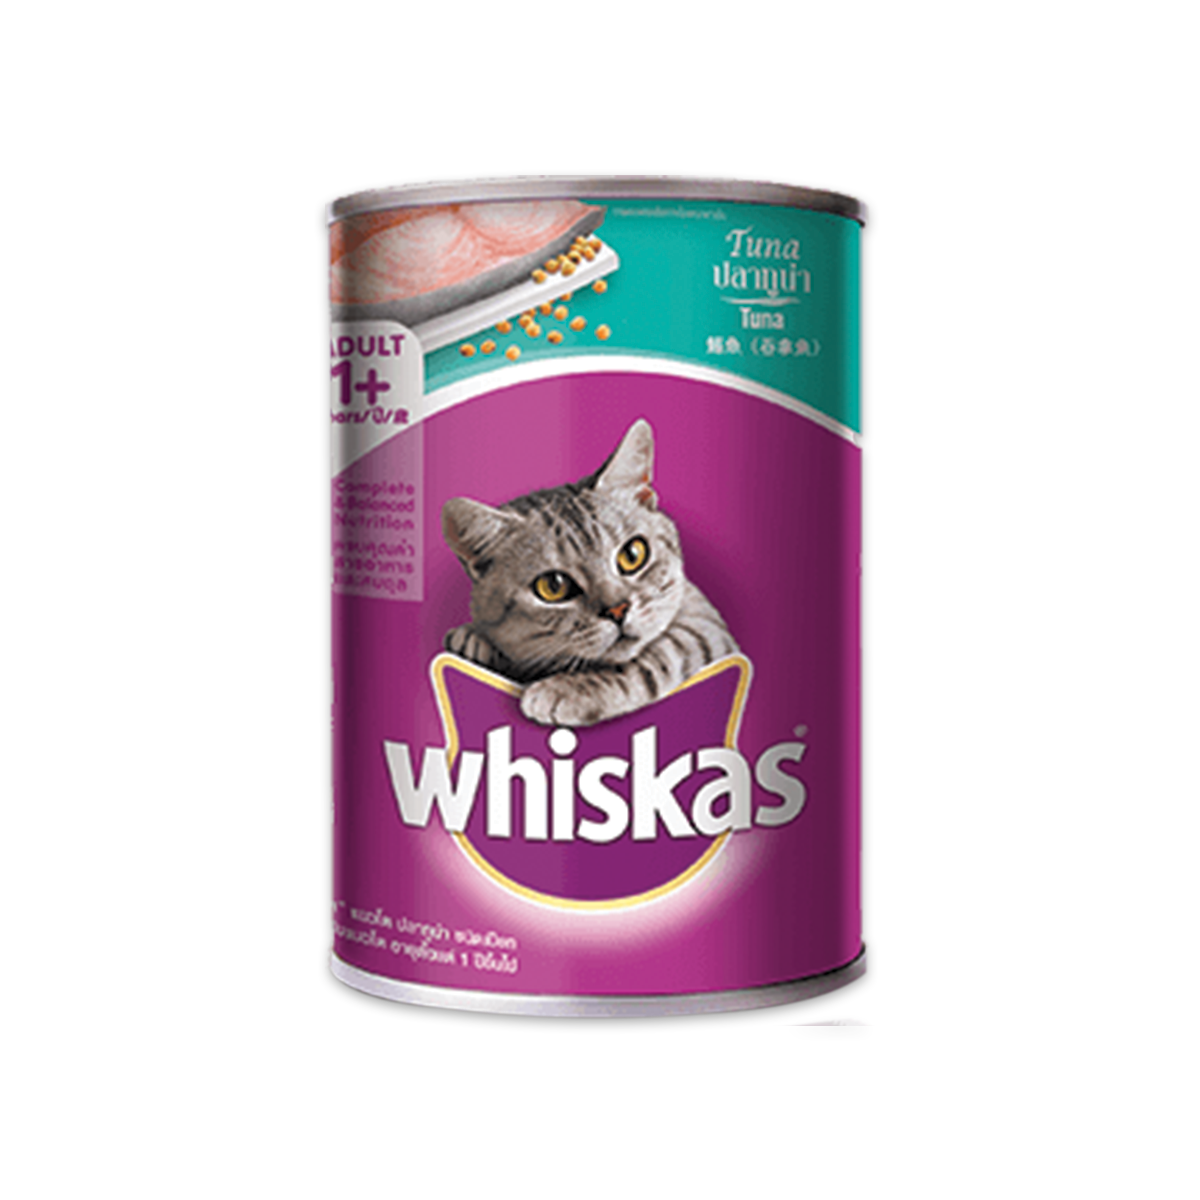 Whiskas Can Tuna วิสกัส อาหารแมวกระป๋อง ทูน่า ขนาด 400 กรัม